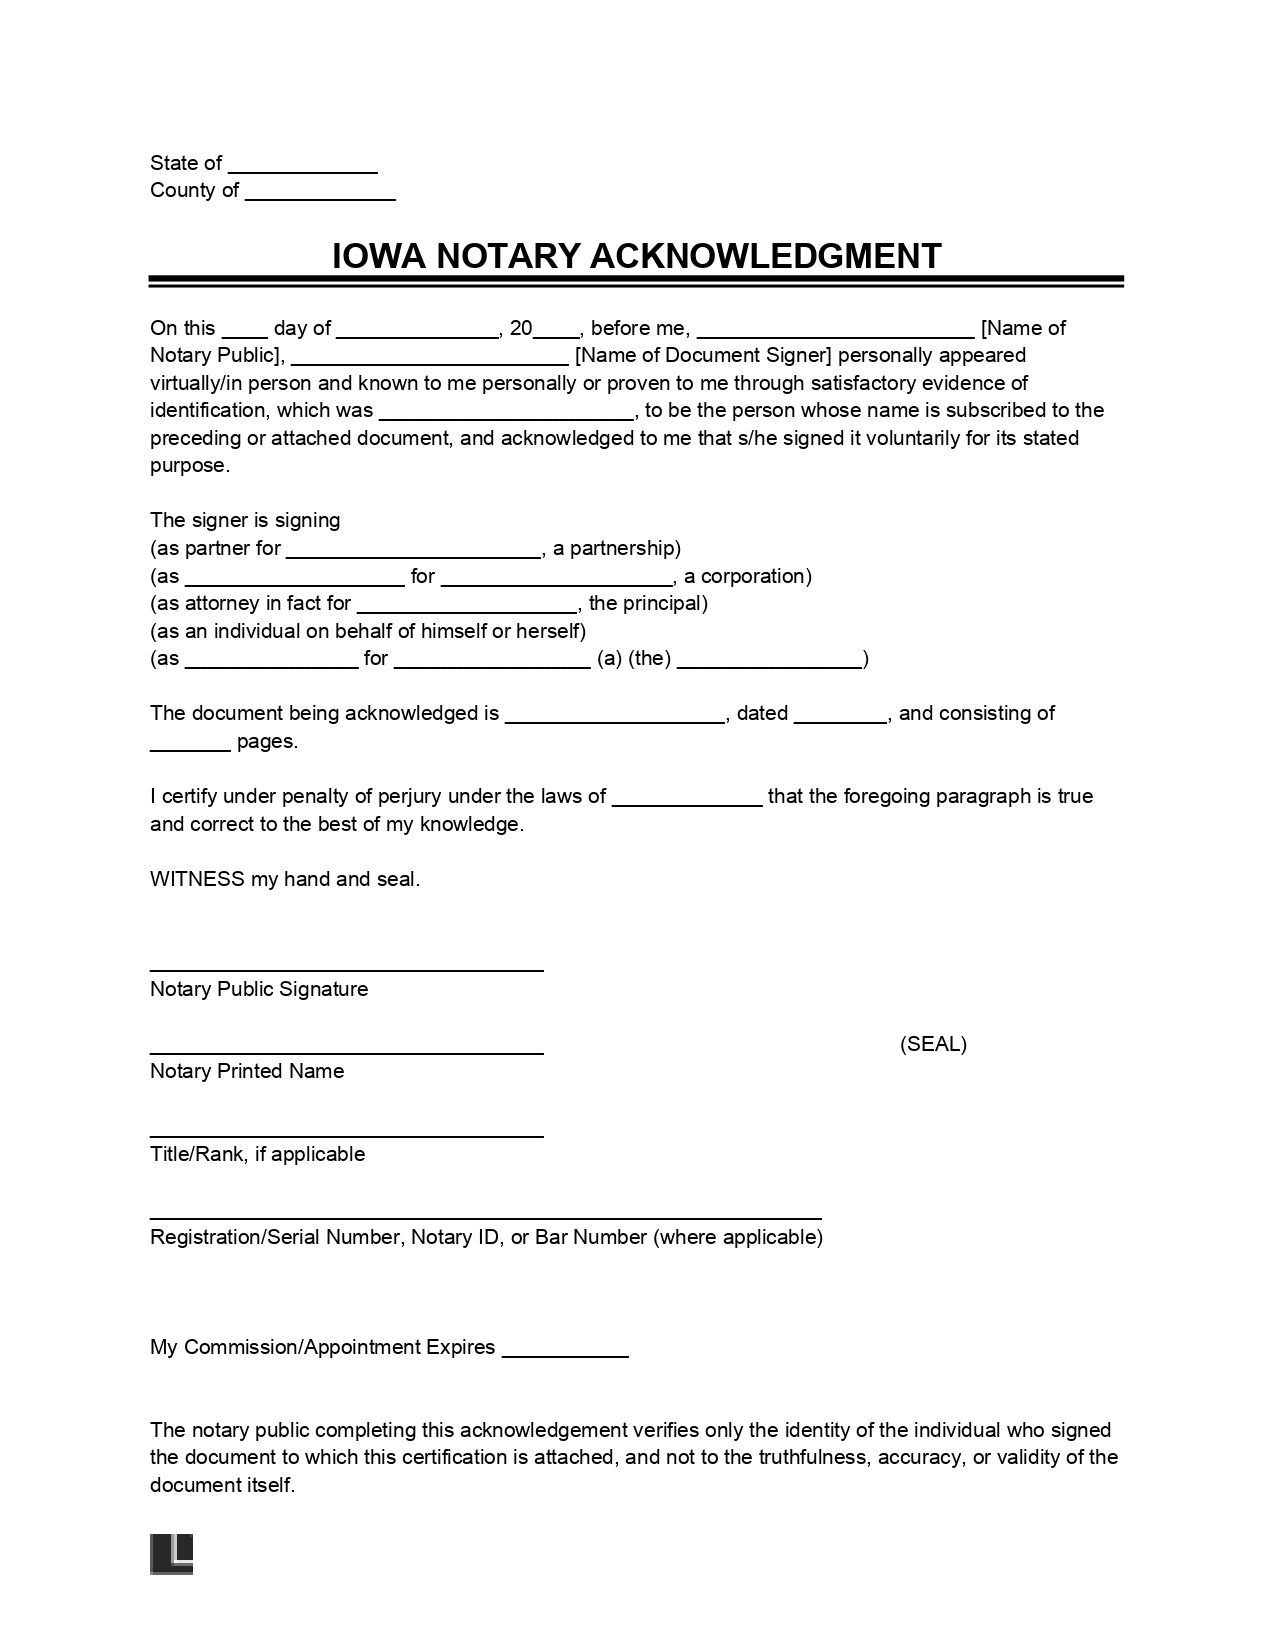 Iowa Notary Acknowledgement Form